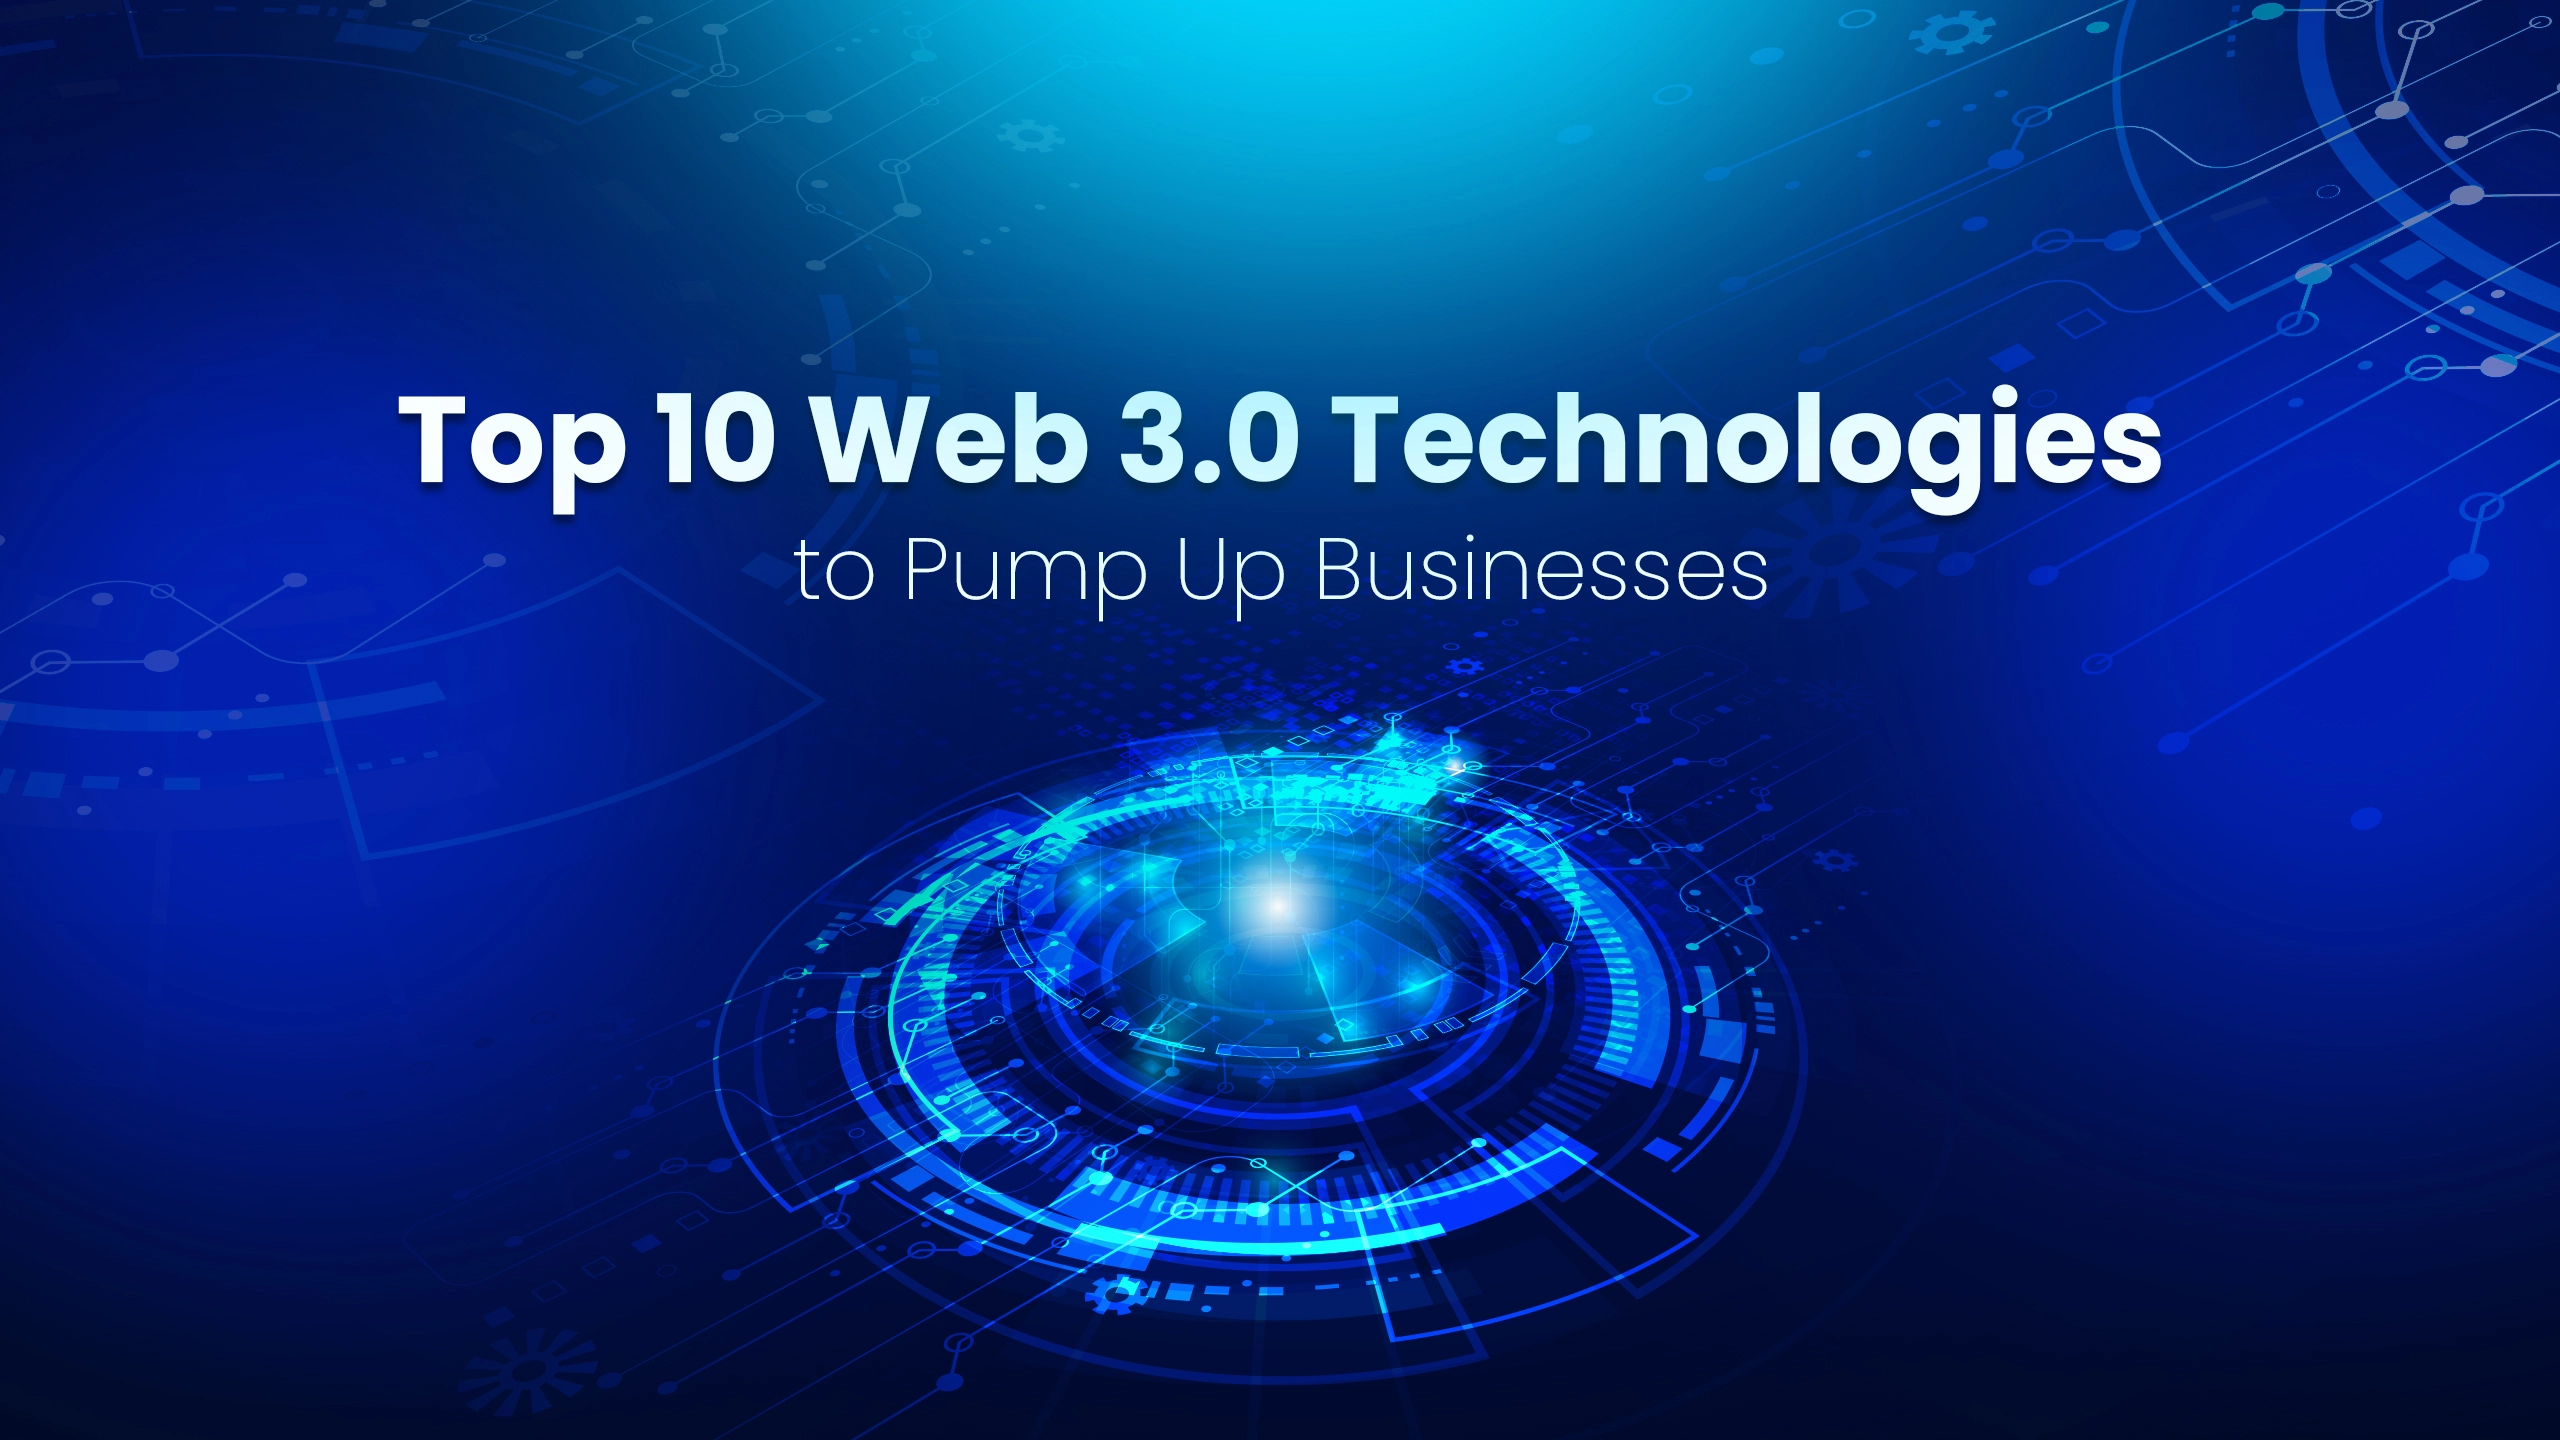 Web 3.0 Technologies